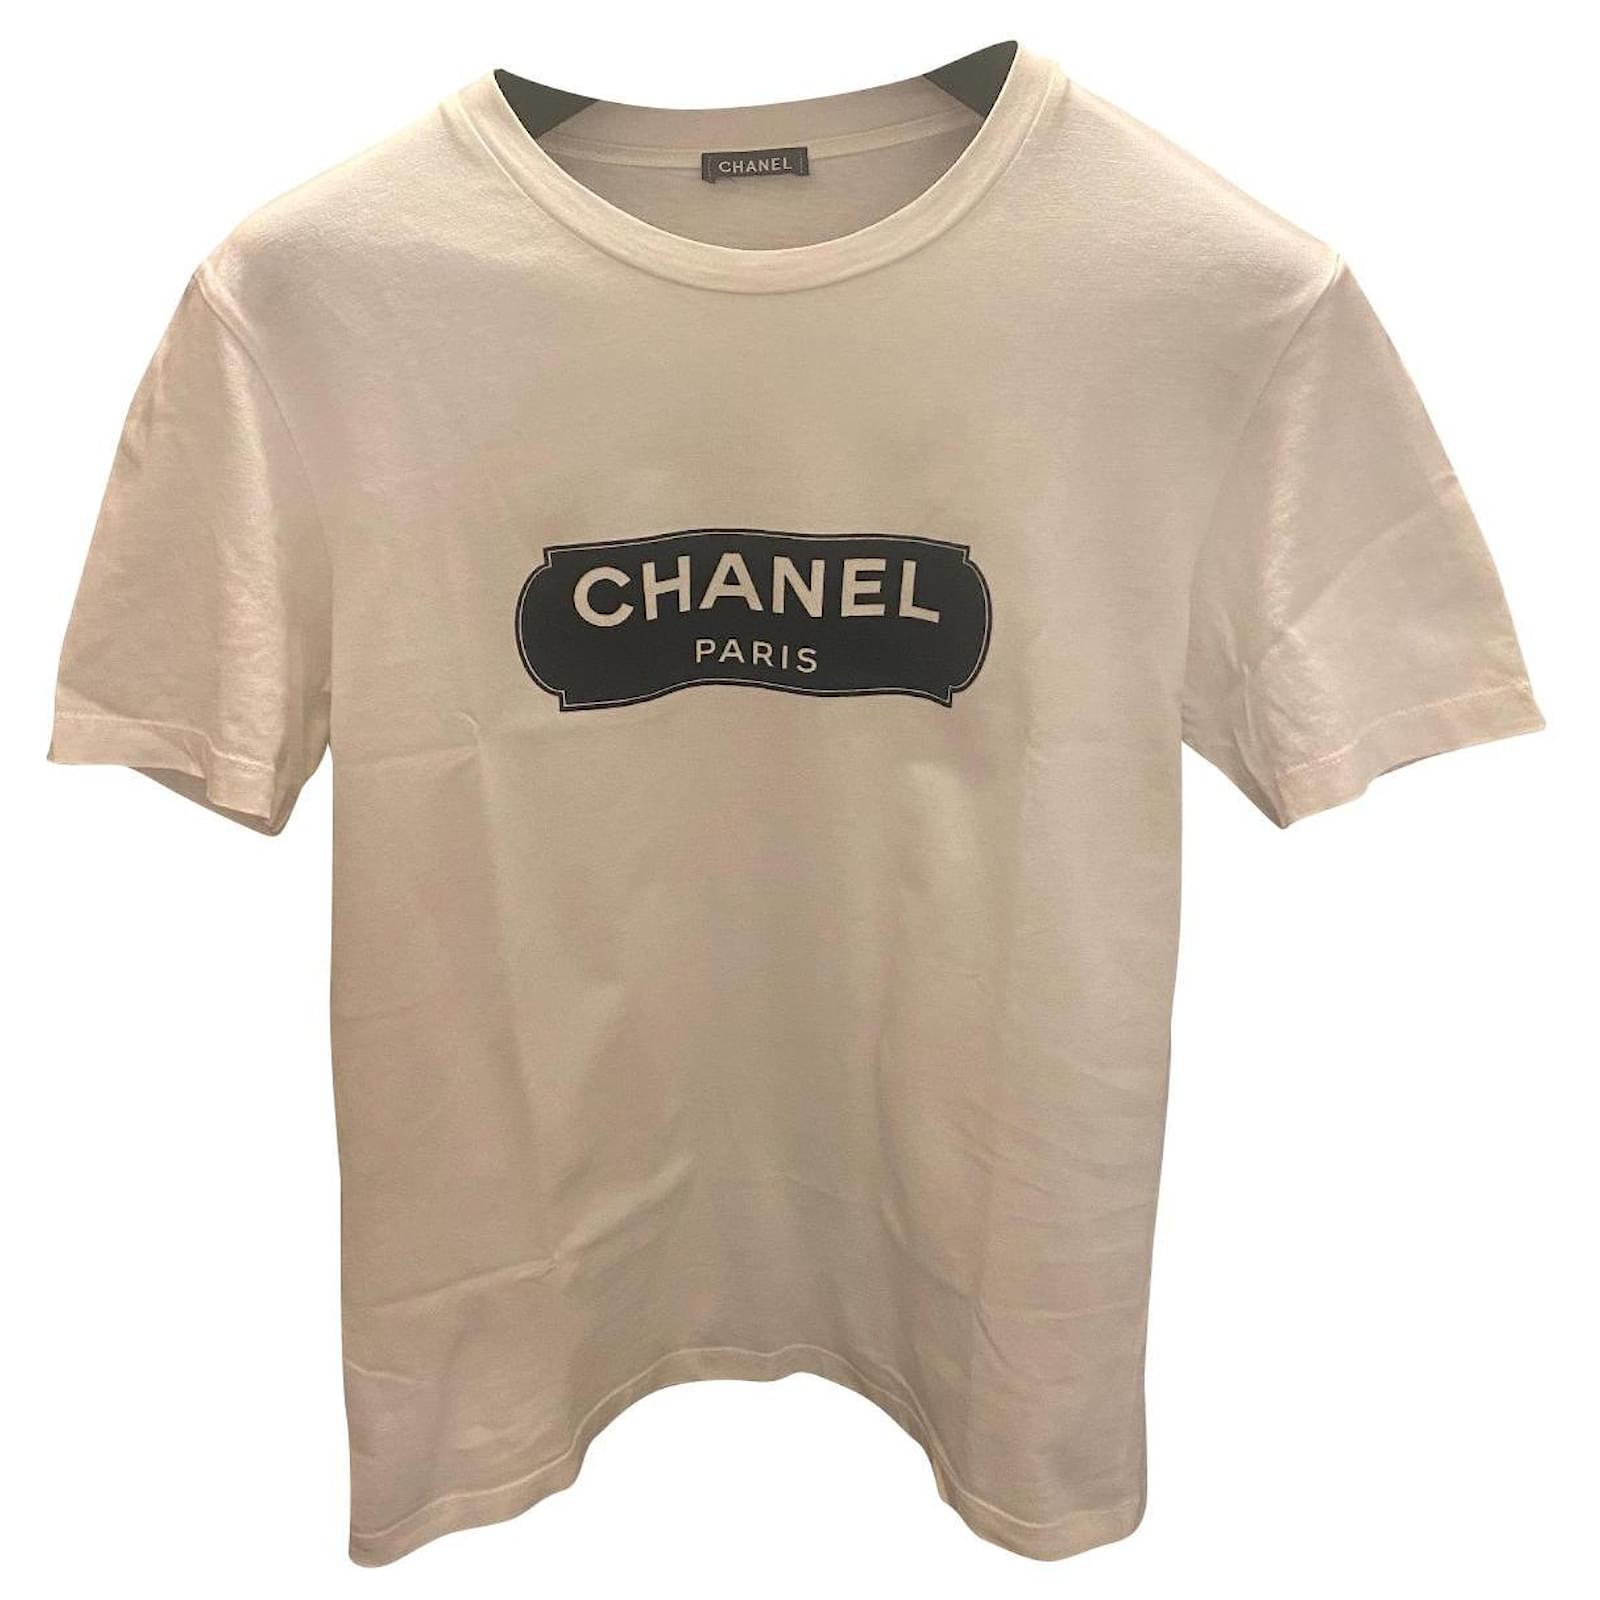 chanel t shirt men's price